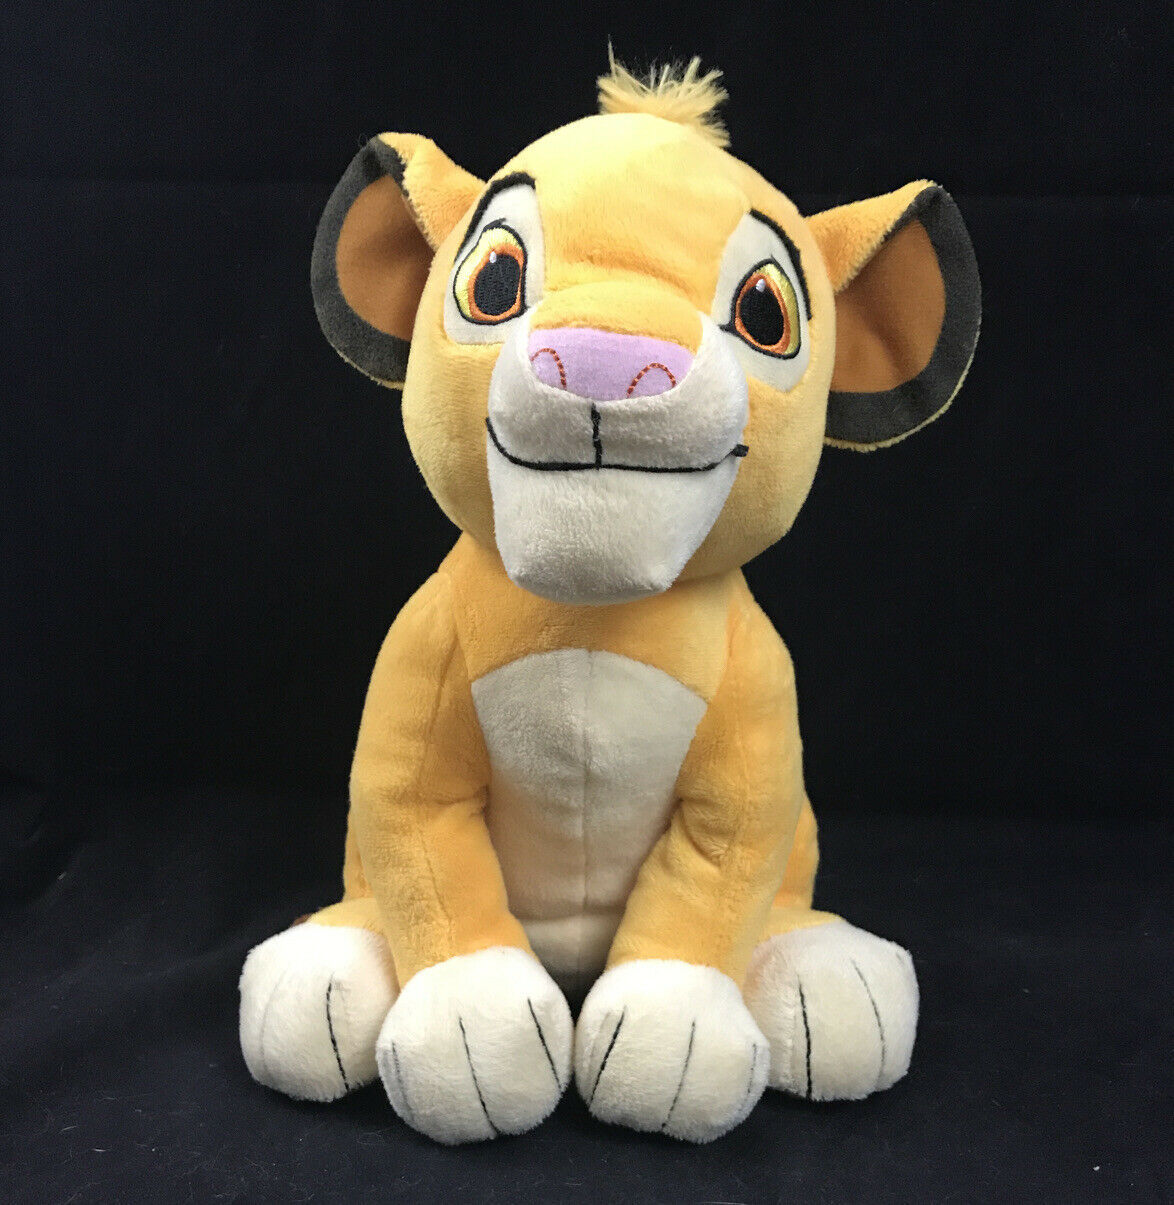 Primary image for Disney The Lion King Simba plush Kohls cares for kids stuffed animal toy lion